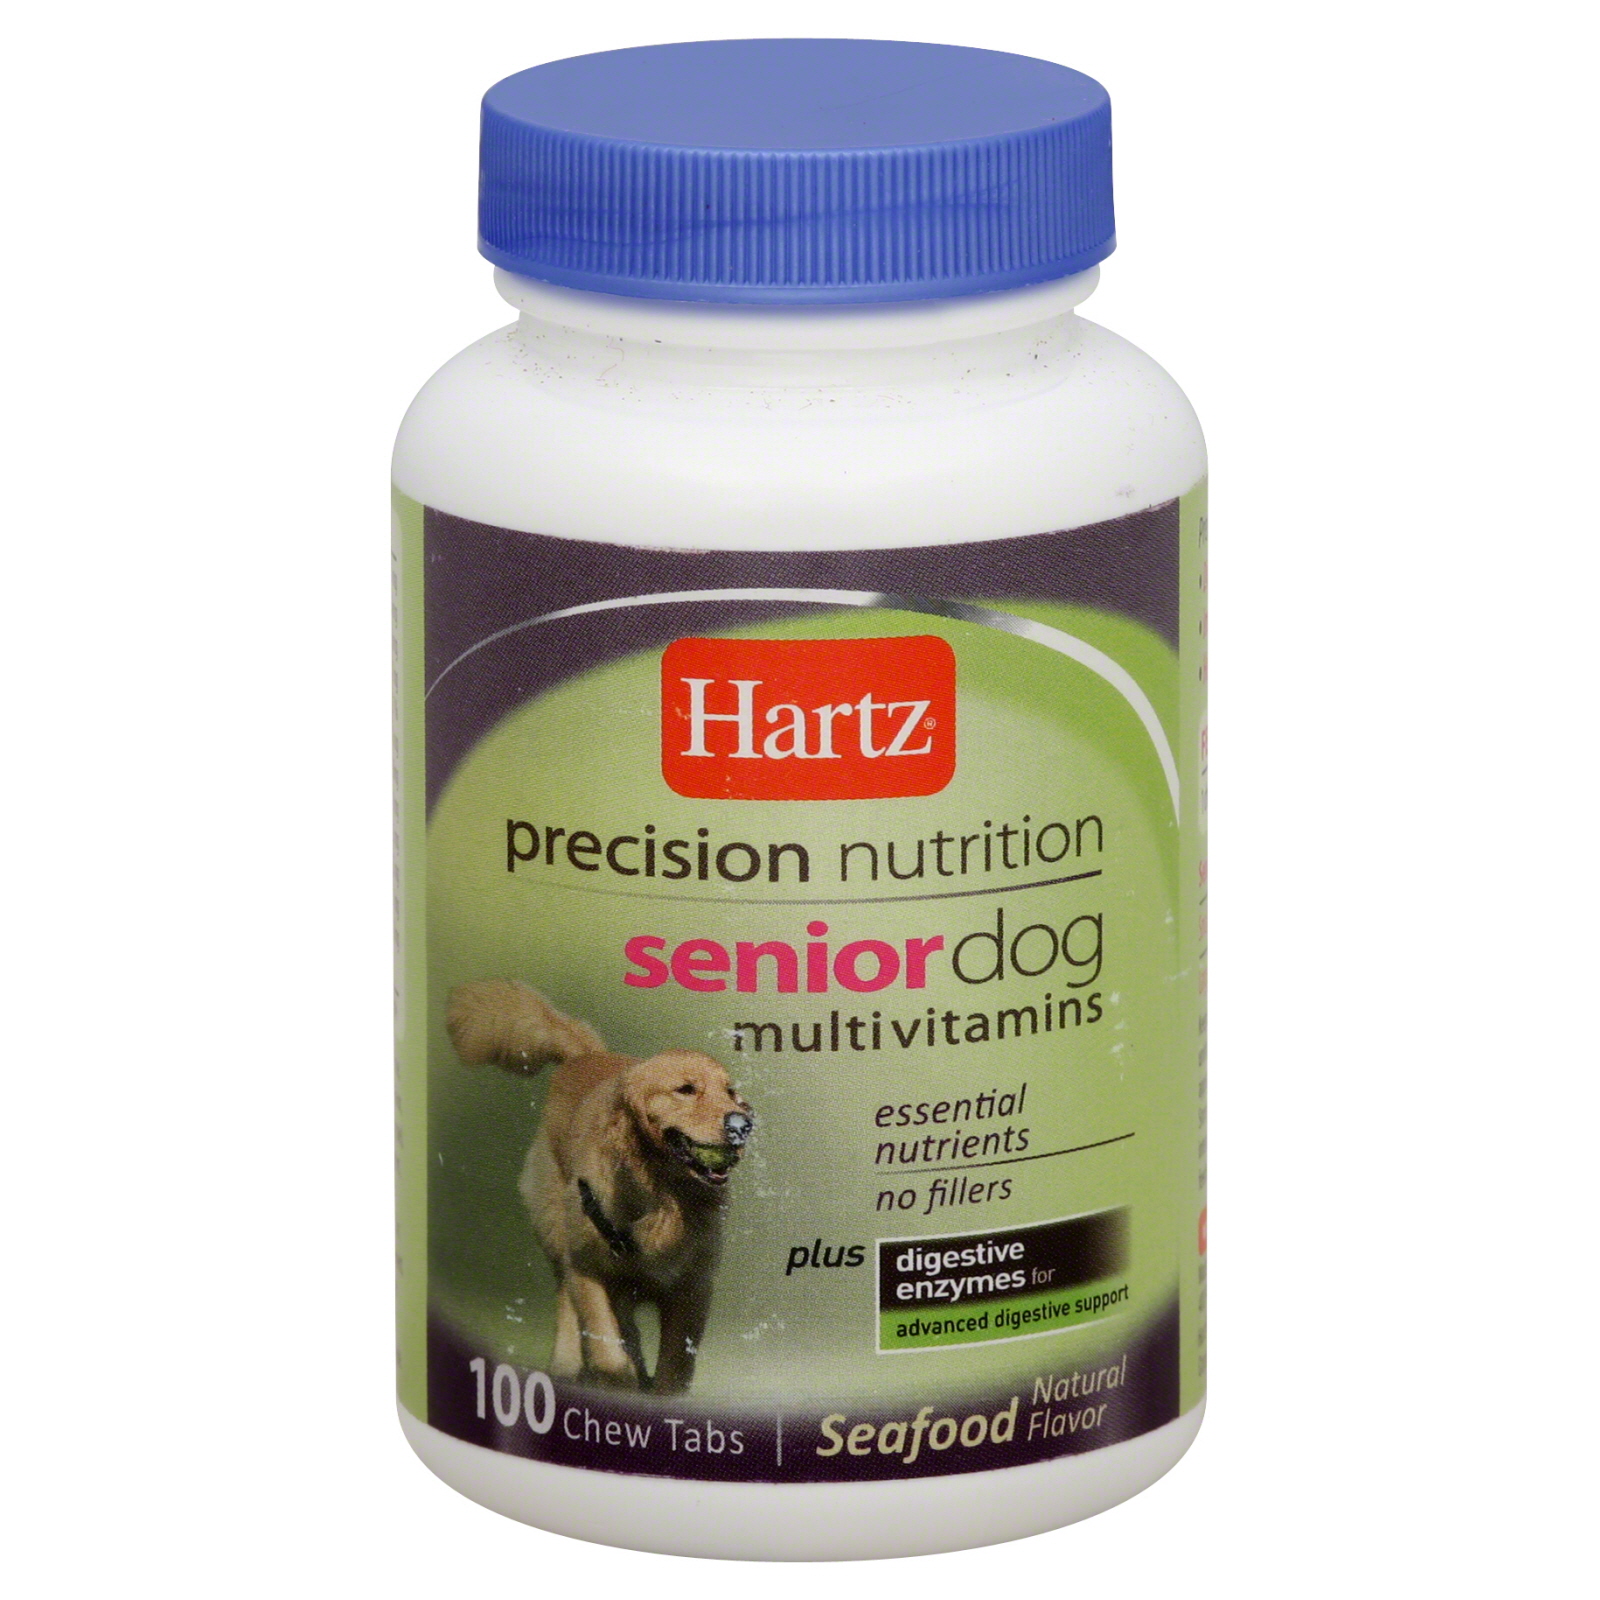 Hartz Precision Nutrition Multivitamins, Senior Dog, Seafood, Chew Tabs, 100 tabs